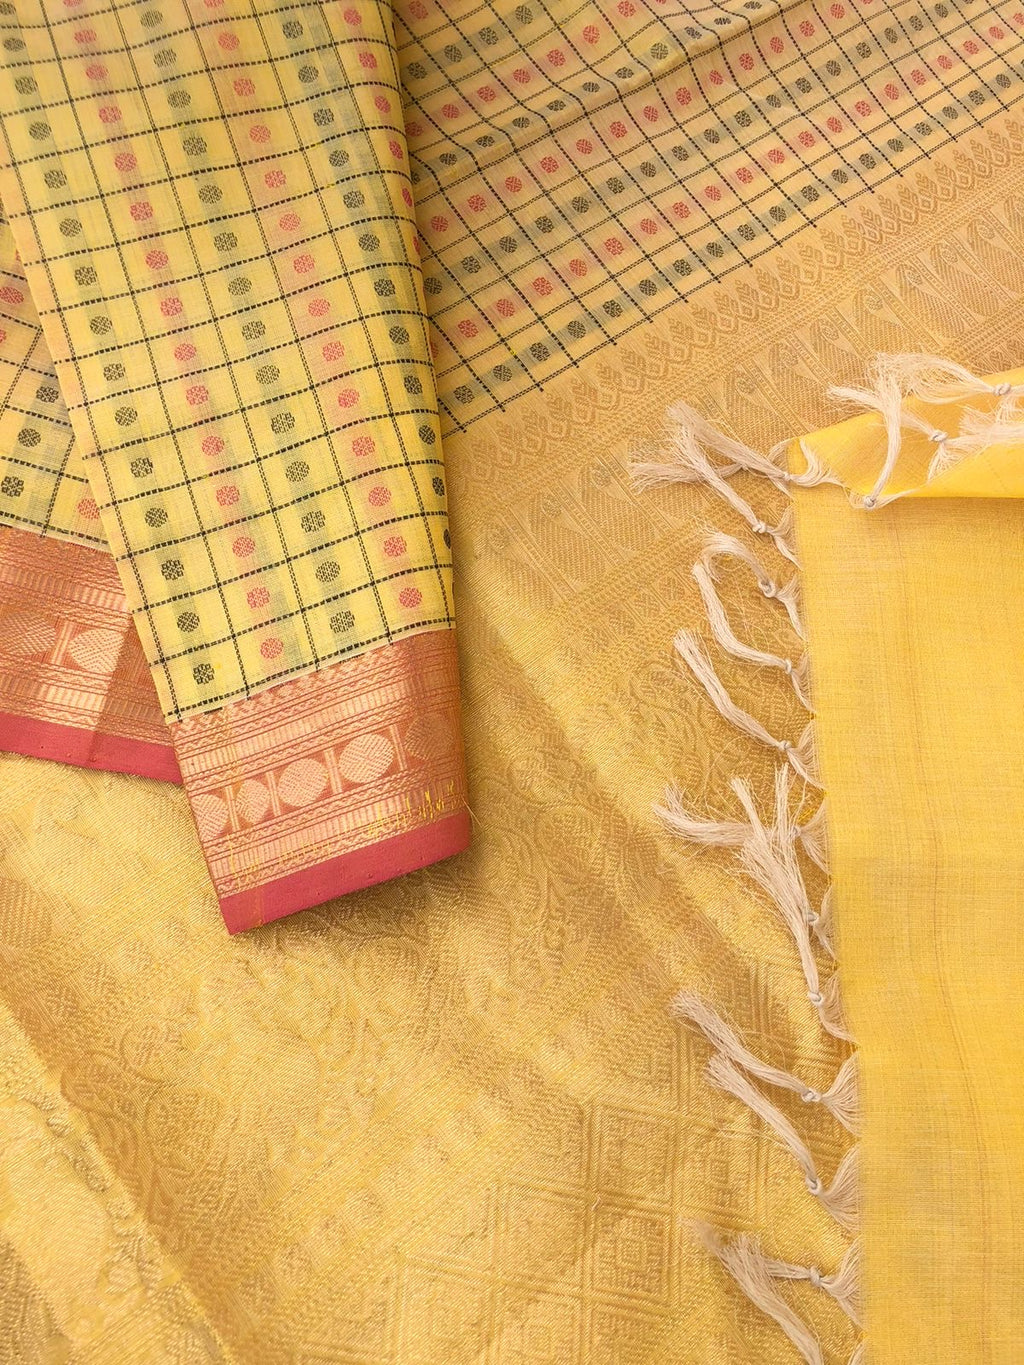 Woven Motifs Silk Cotton - butterscotch creamy yellow 1000 rudurakasham buttas